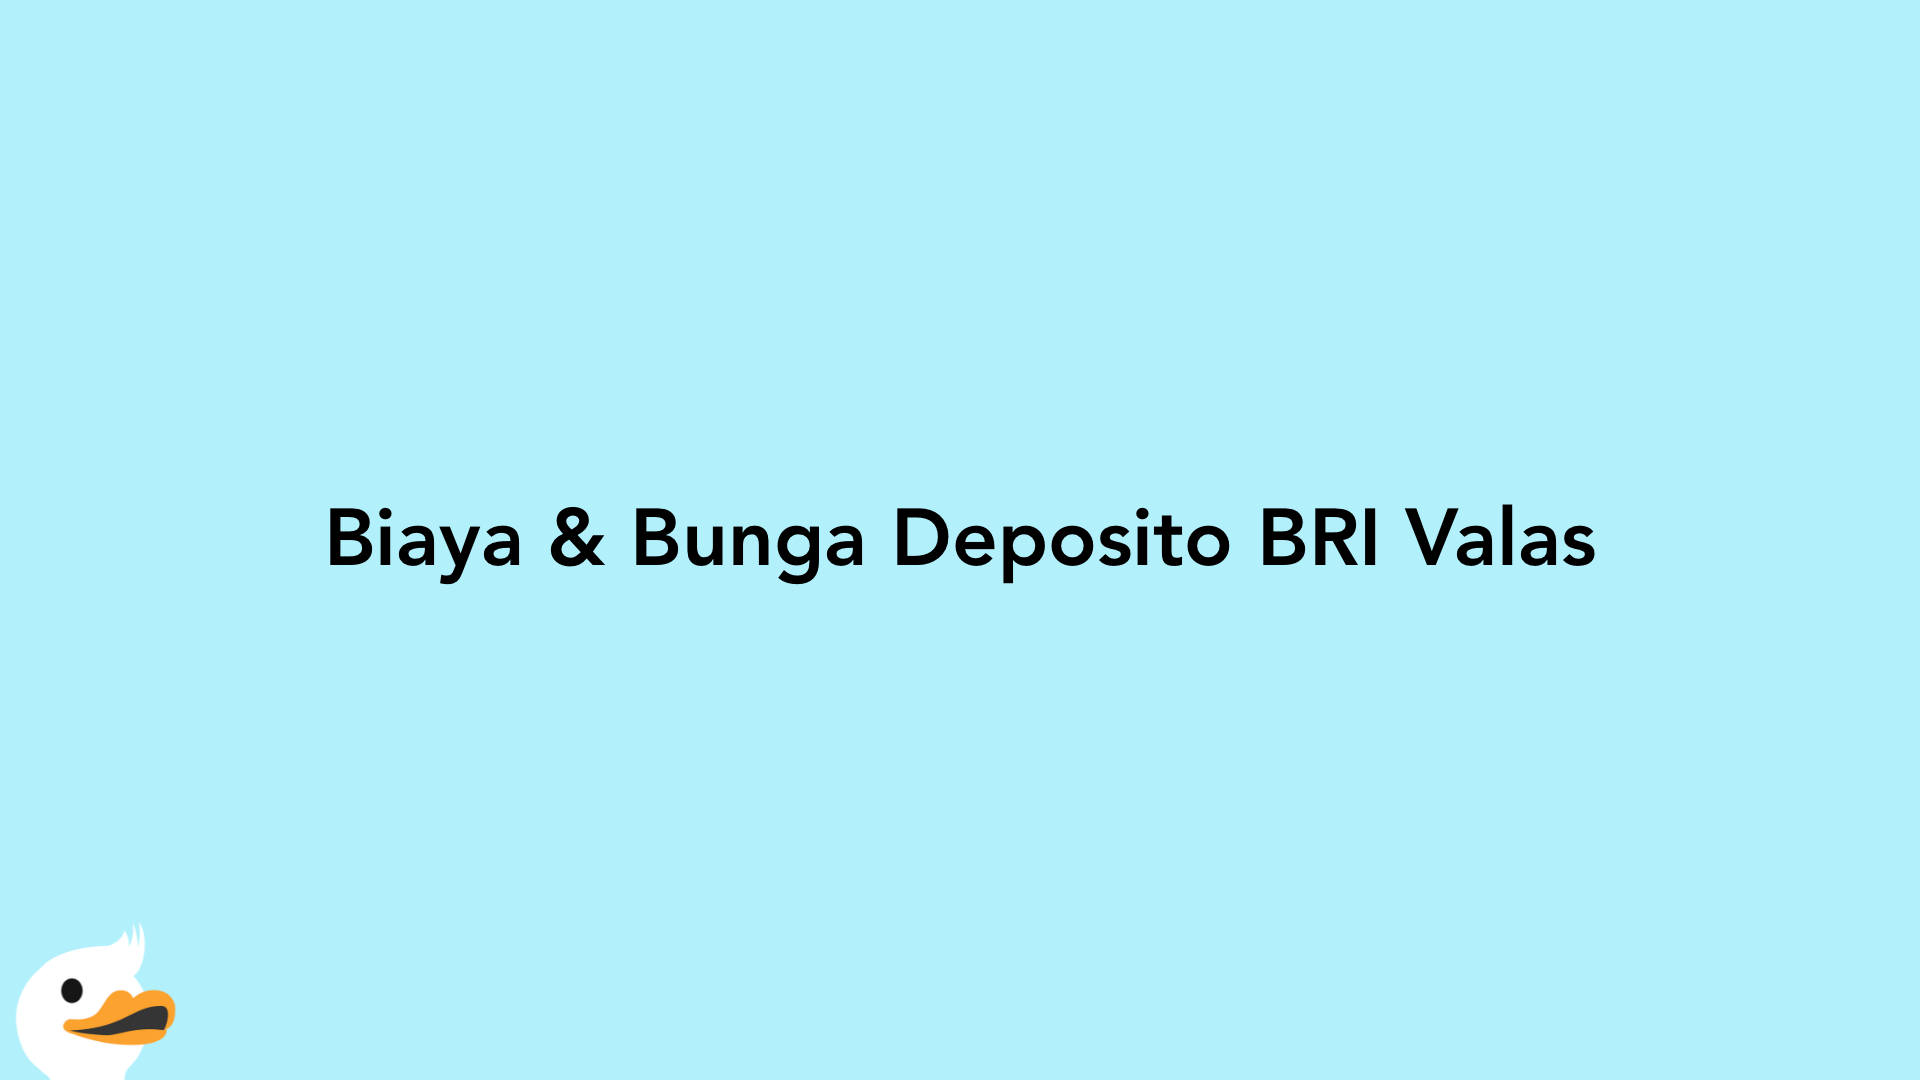 Biaya & Bunga Deposito BRI Valas